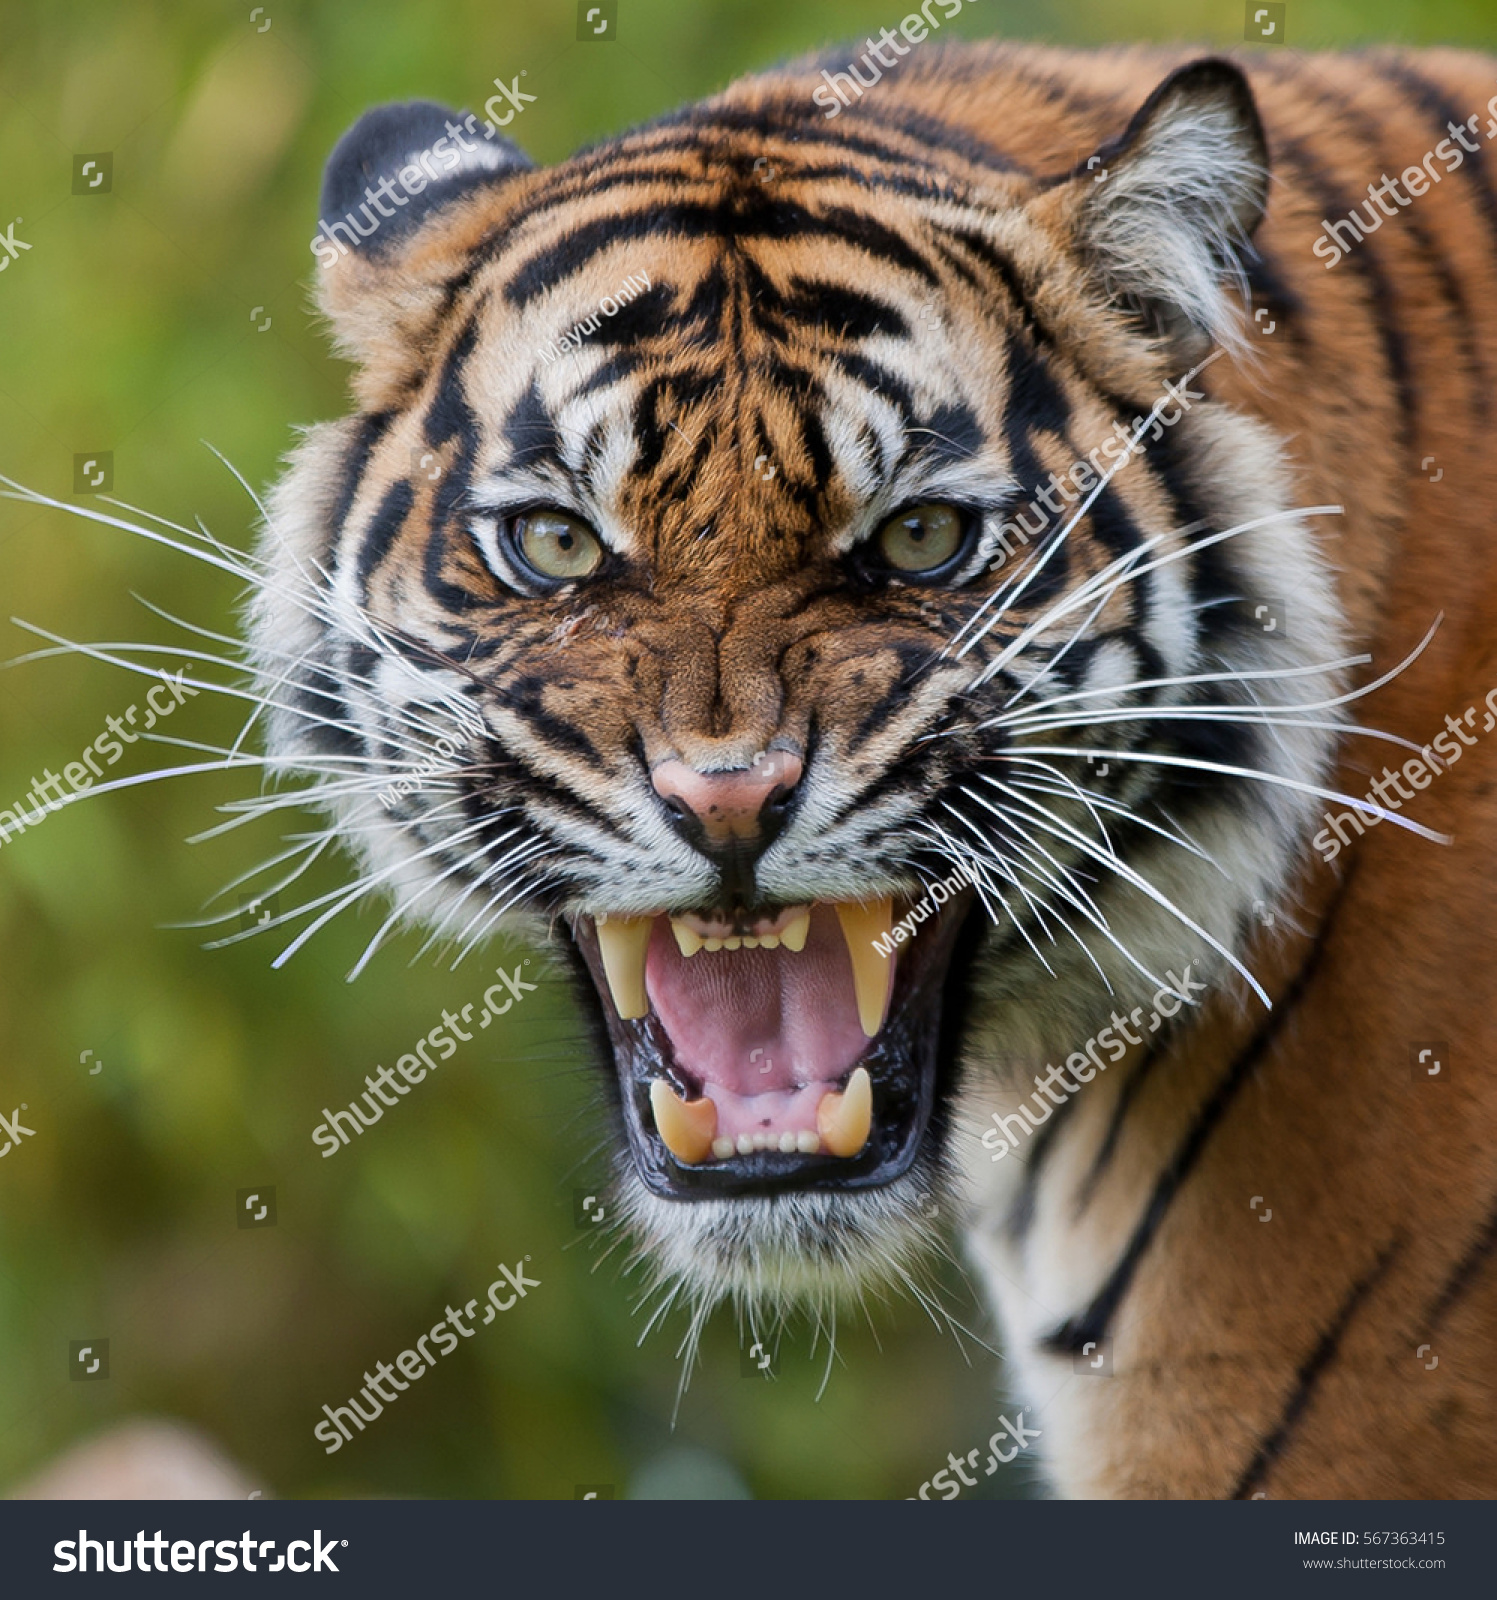 Roaring Tiger Stock Photo 567363415 - Shutterstock